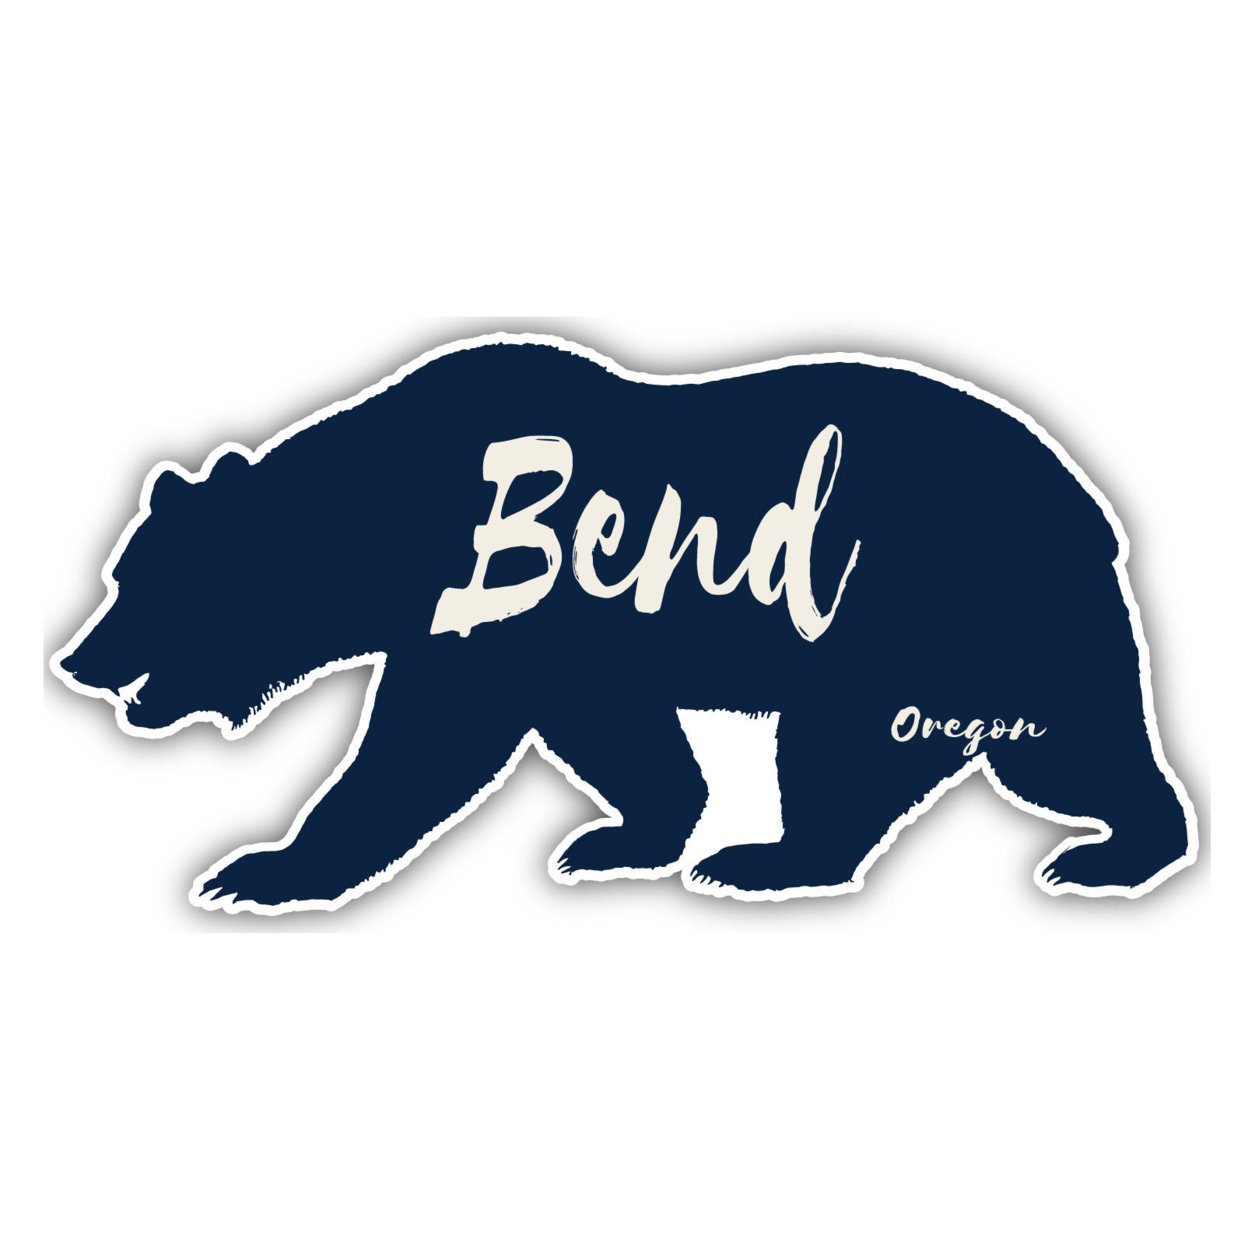 Bend Oregon Souvenir Decorative Stickers (Choose Theme And Size) - 4-Pack, 4-Inch, Tent